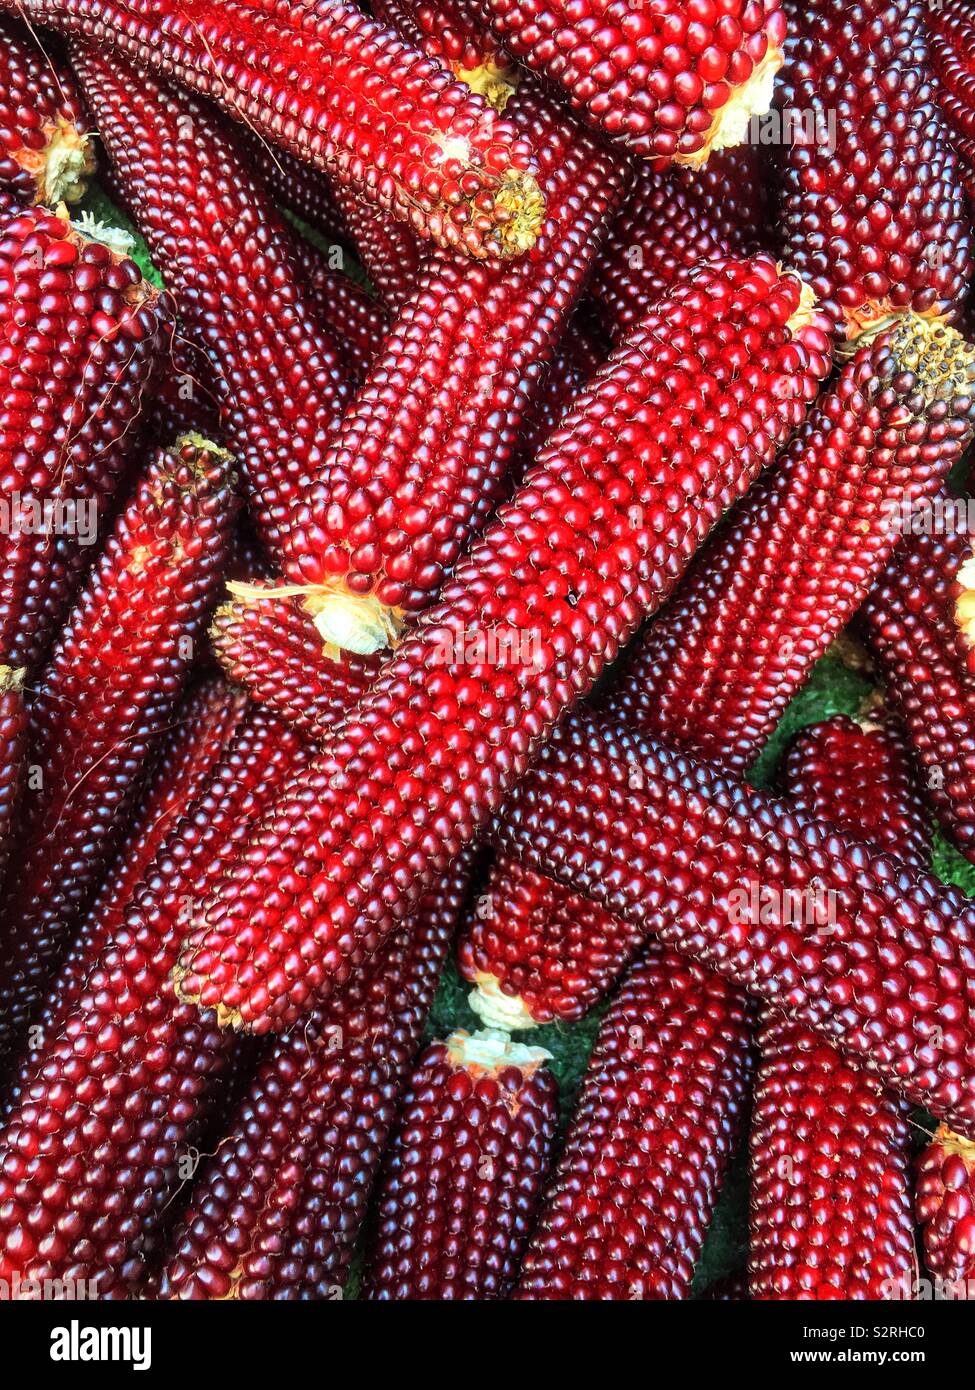 Farm fresh red popping corn on the cob. Stock Photo